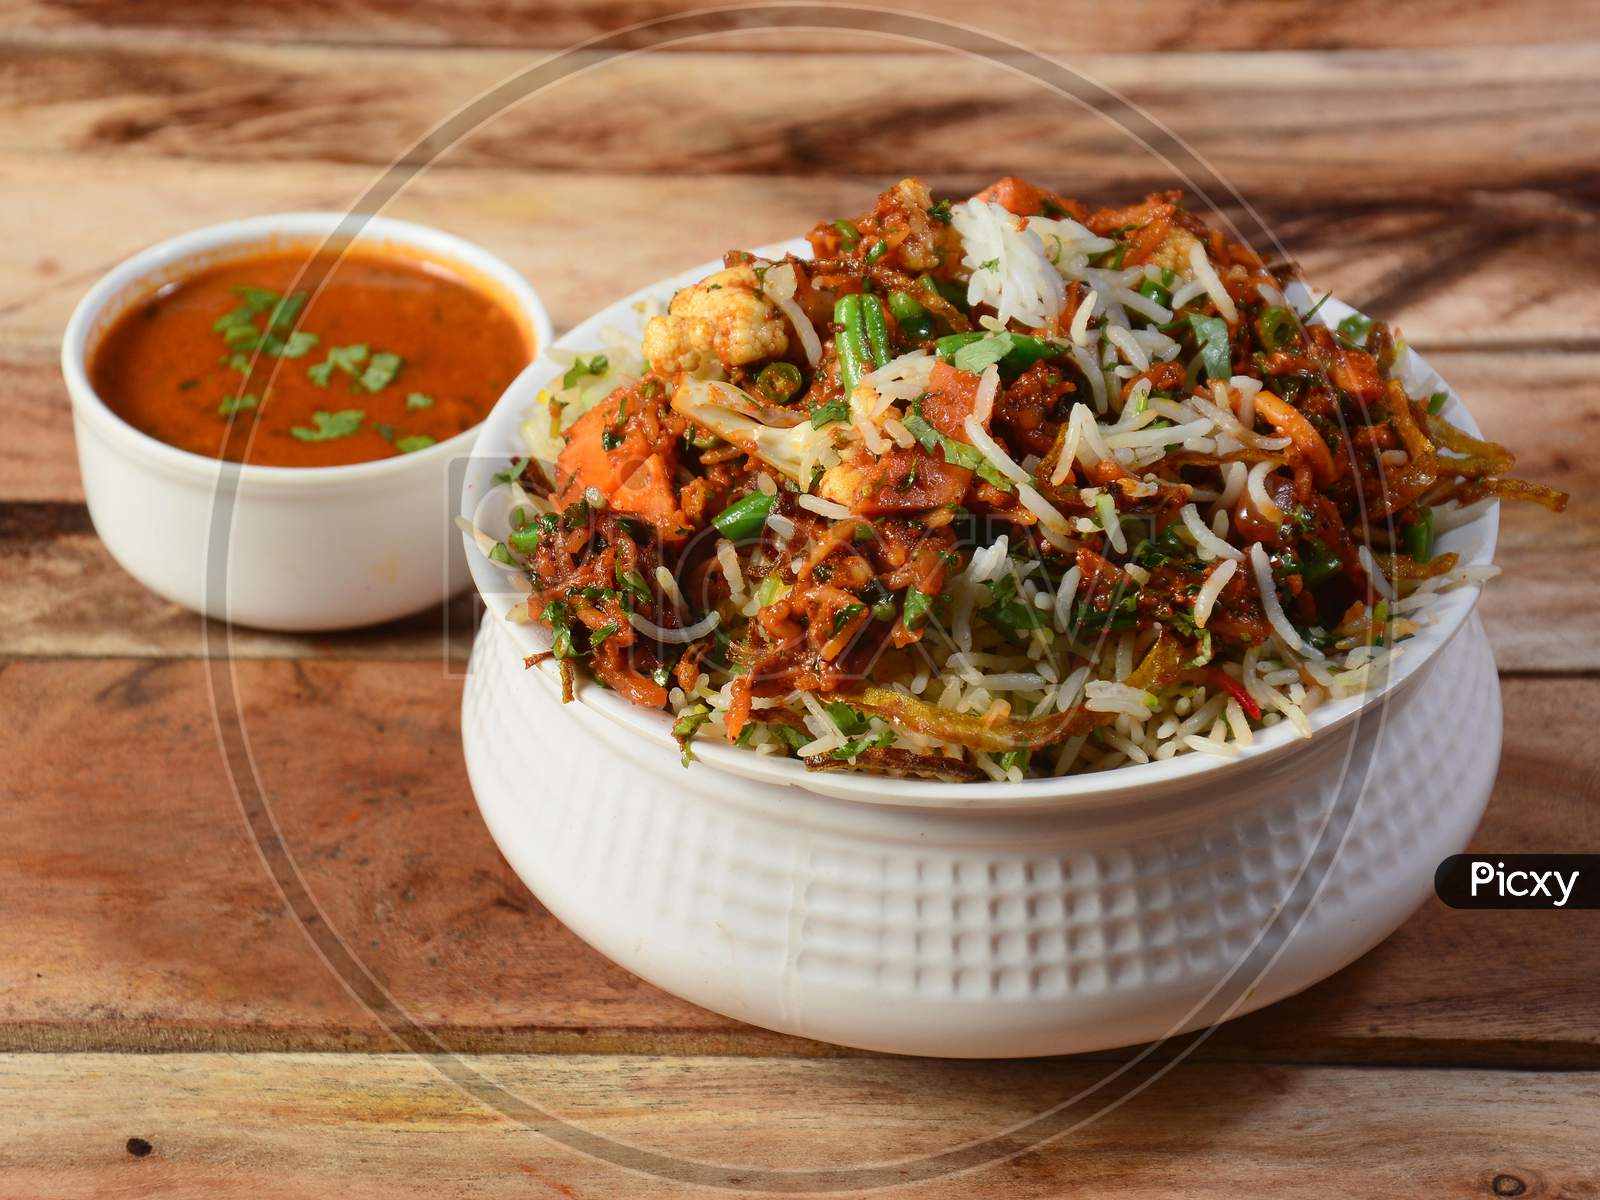 Traditional Hyderabadi Vegetable / Veg Dum Biryani With Mixed Veggies Served With Curry, Selective Focus